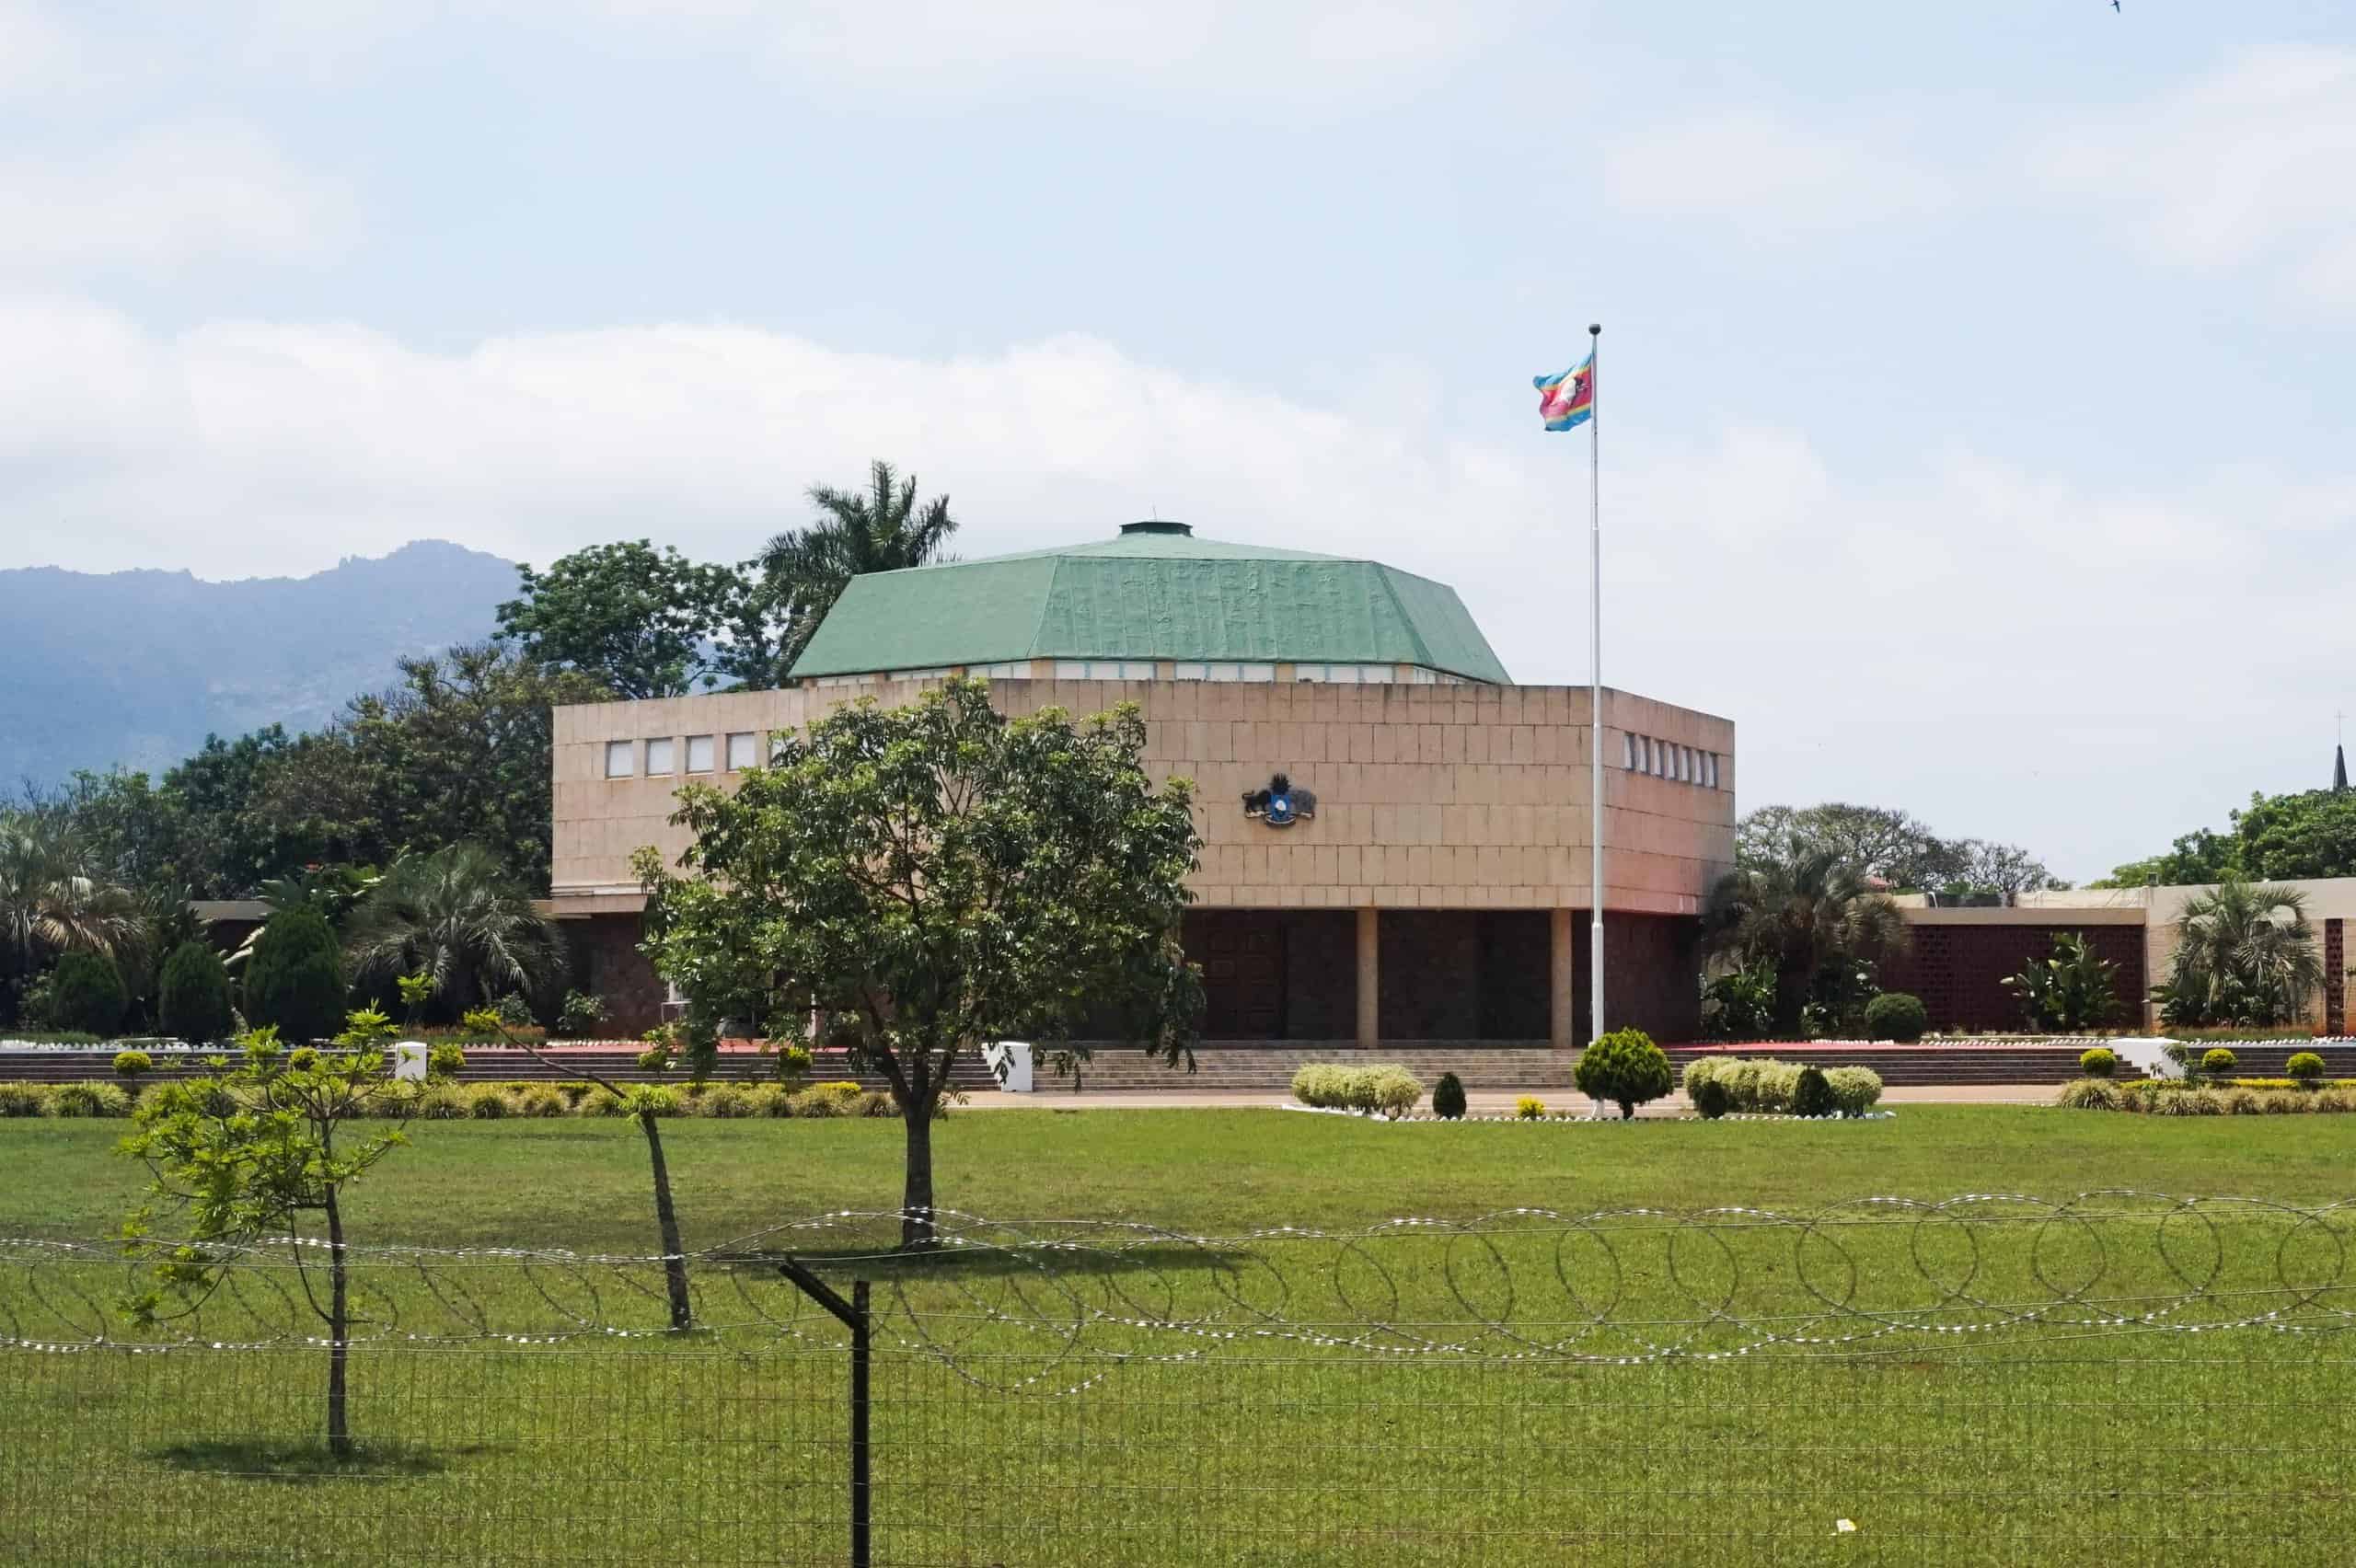 Parliament building of Eswatini, Lobamba by Bernard Gagnon